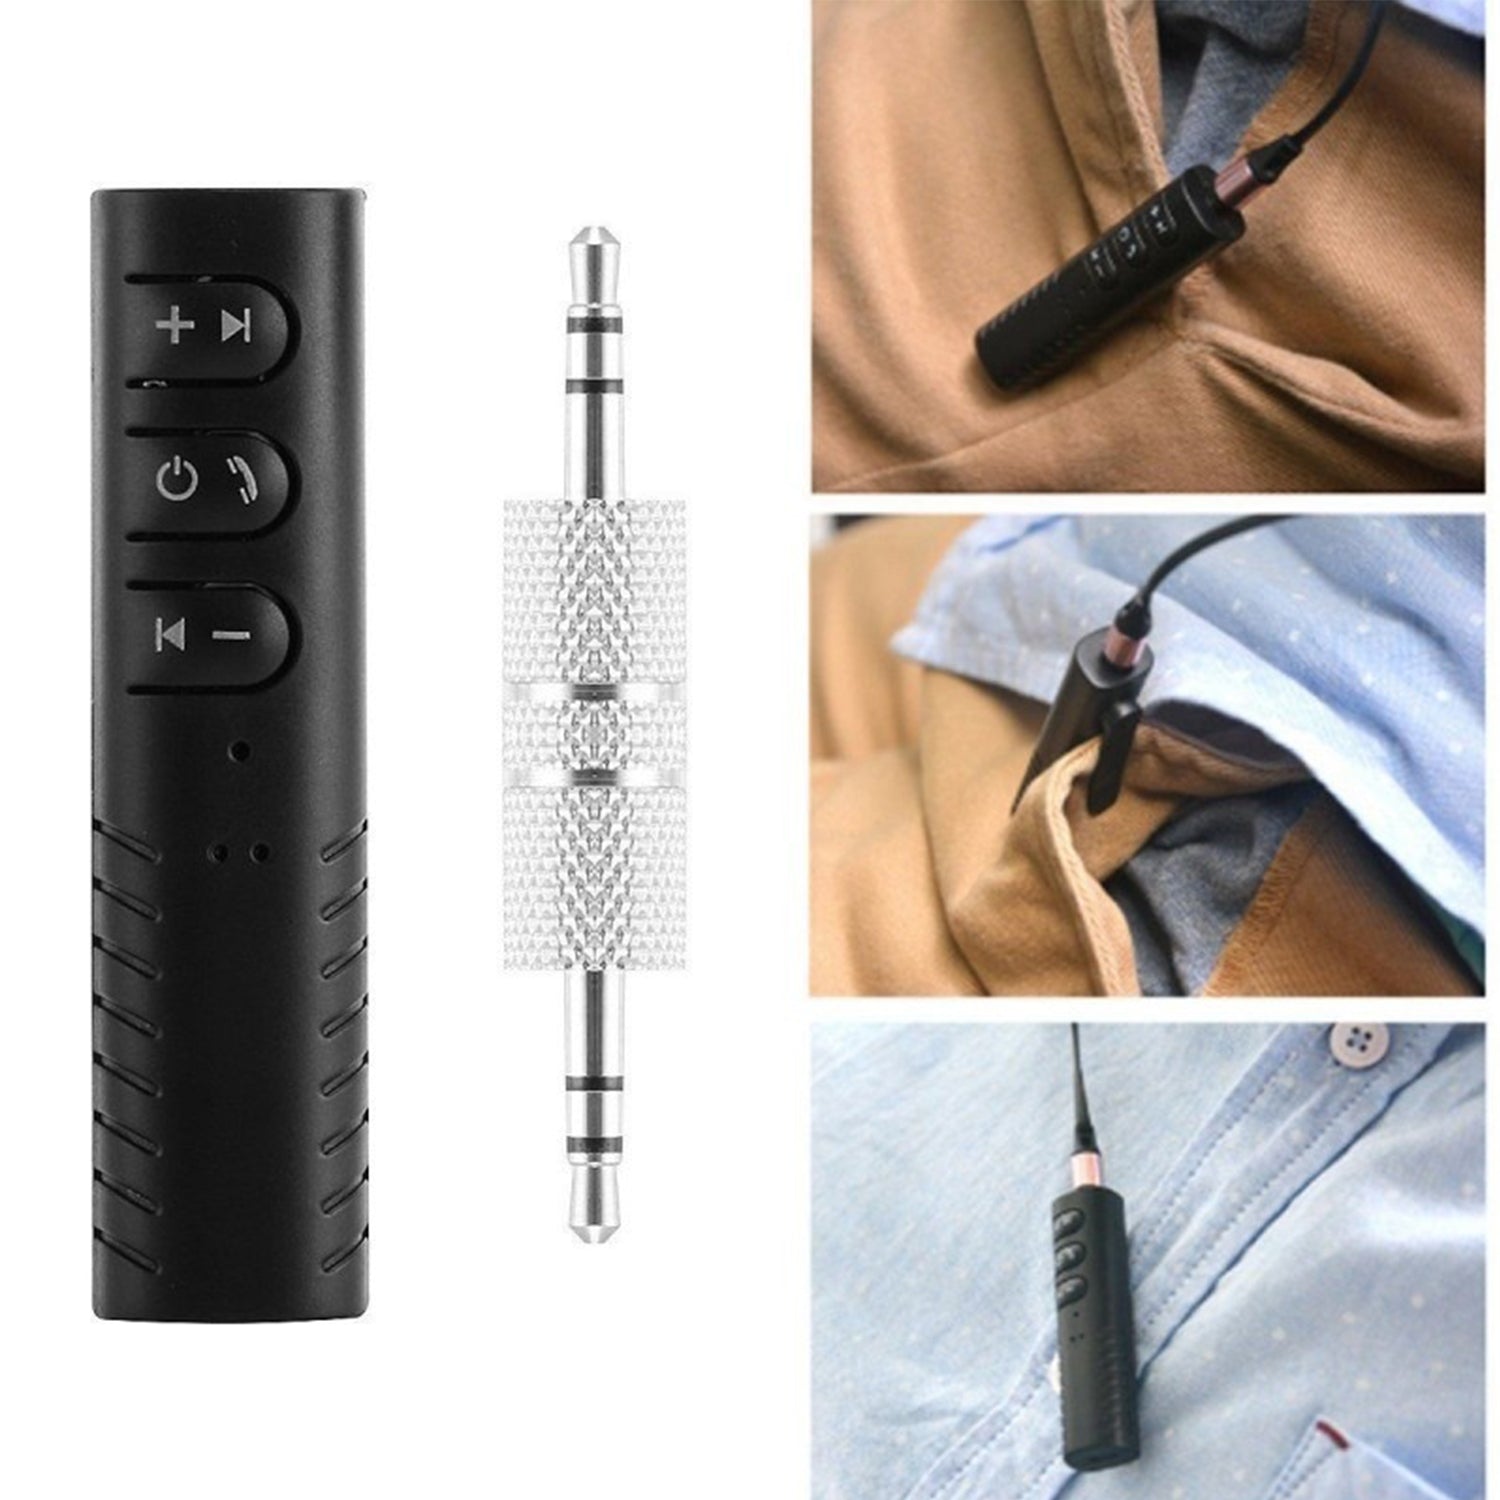 Mini Wireless Bluetooth Receiver Portable Aux Audio Receiver Adapter